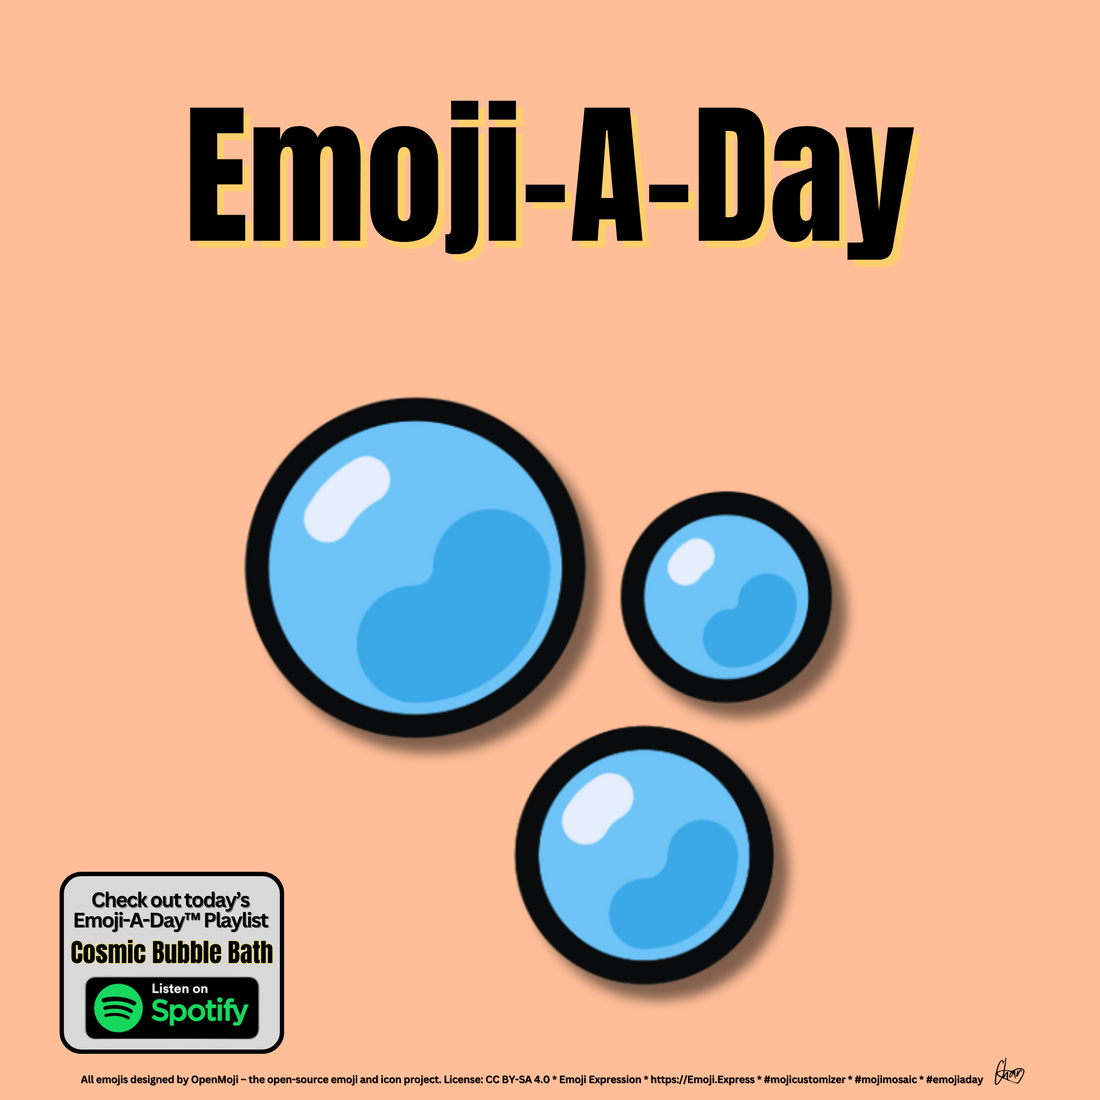 Emoij-A-Day theme with Bubbles emoji and Cosmic Bubble Bath Spotify Playlist